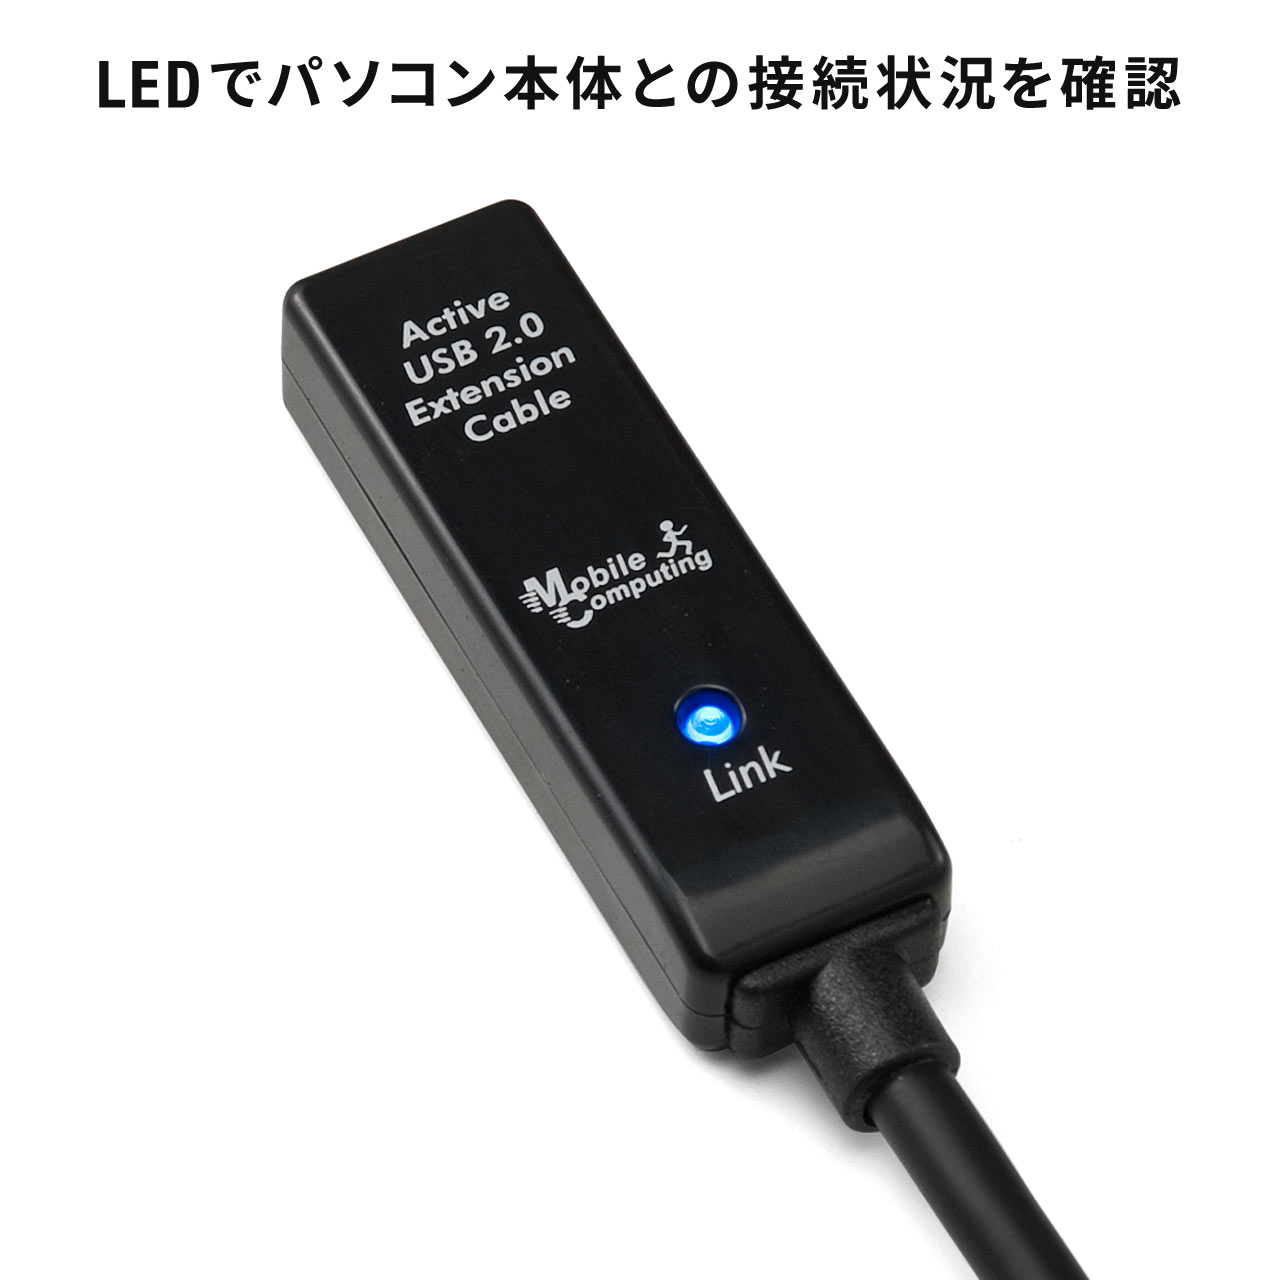 USBリピーターケーブル 20m USB2.0 ブラック USB延長ケーブル